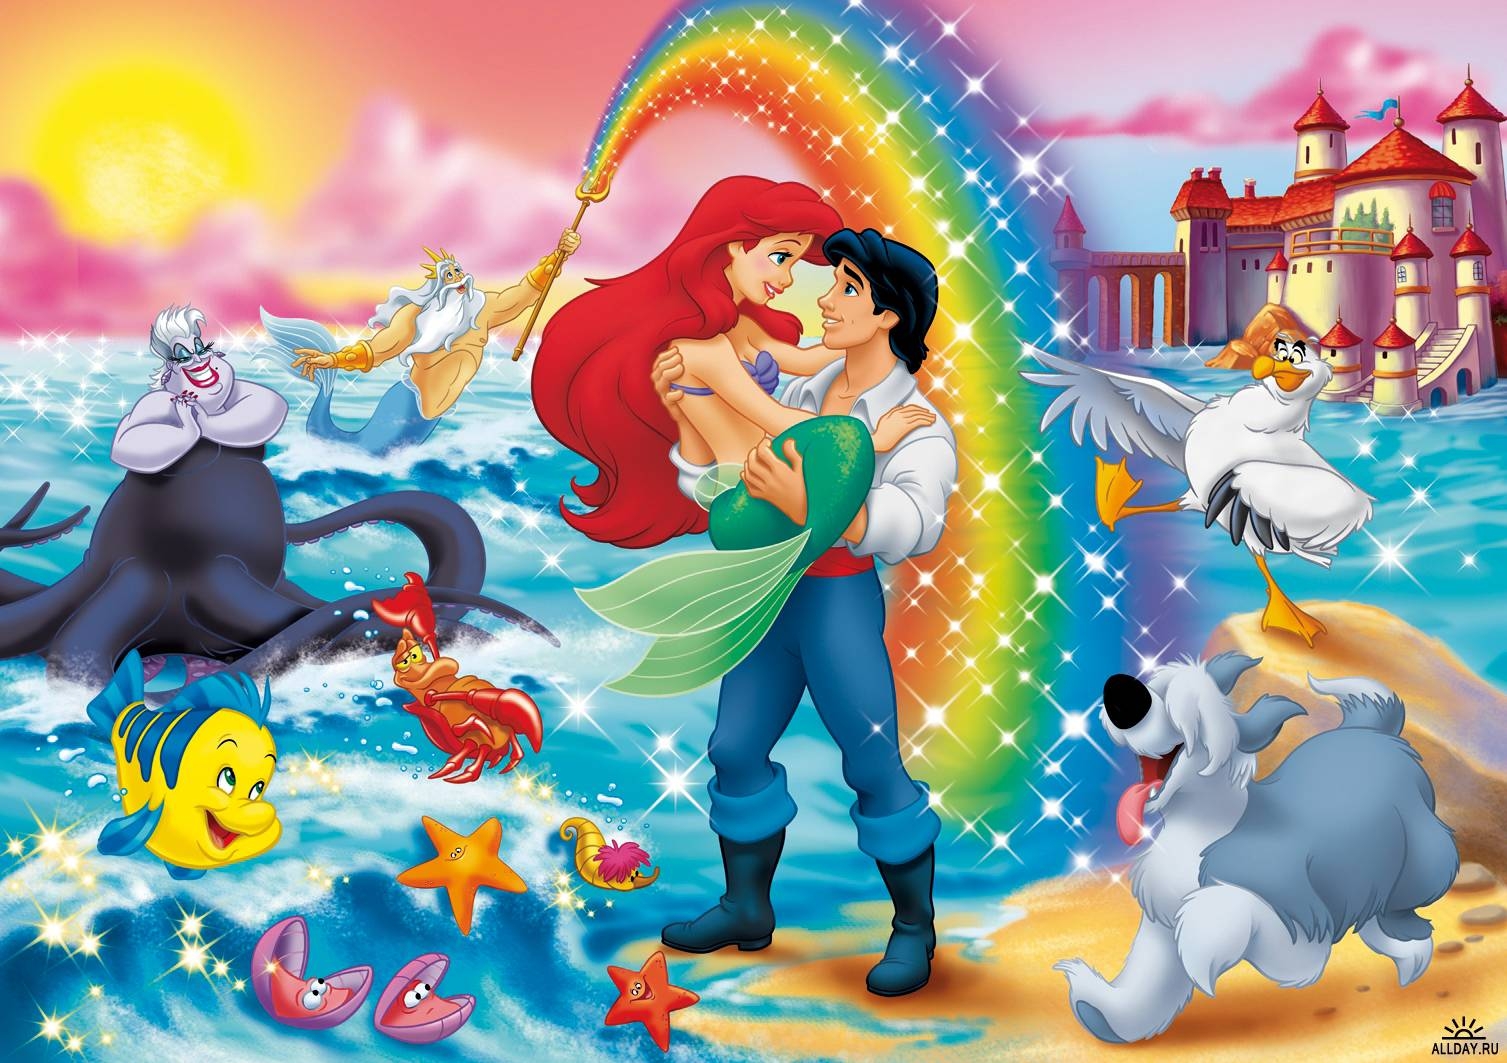 Little Mermaid Disney Princess Cartoon Wallpaper Image For iPad Mini